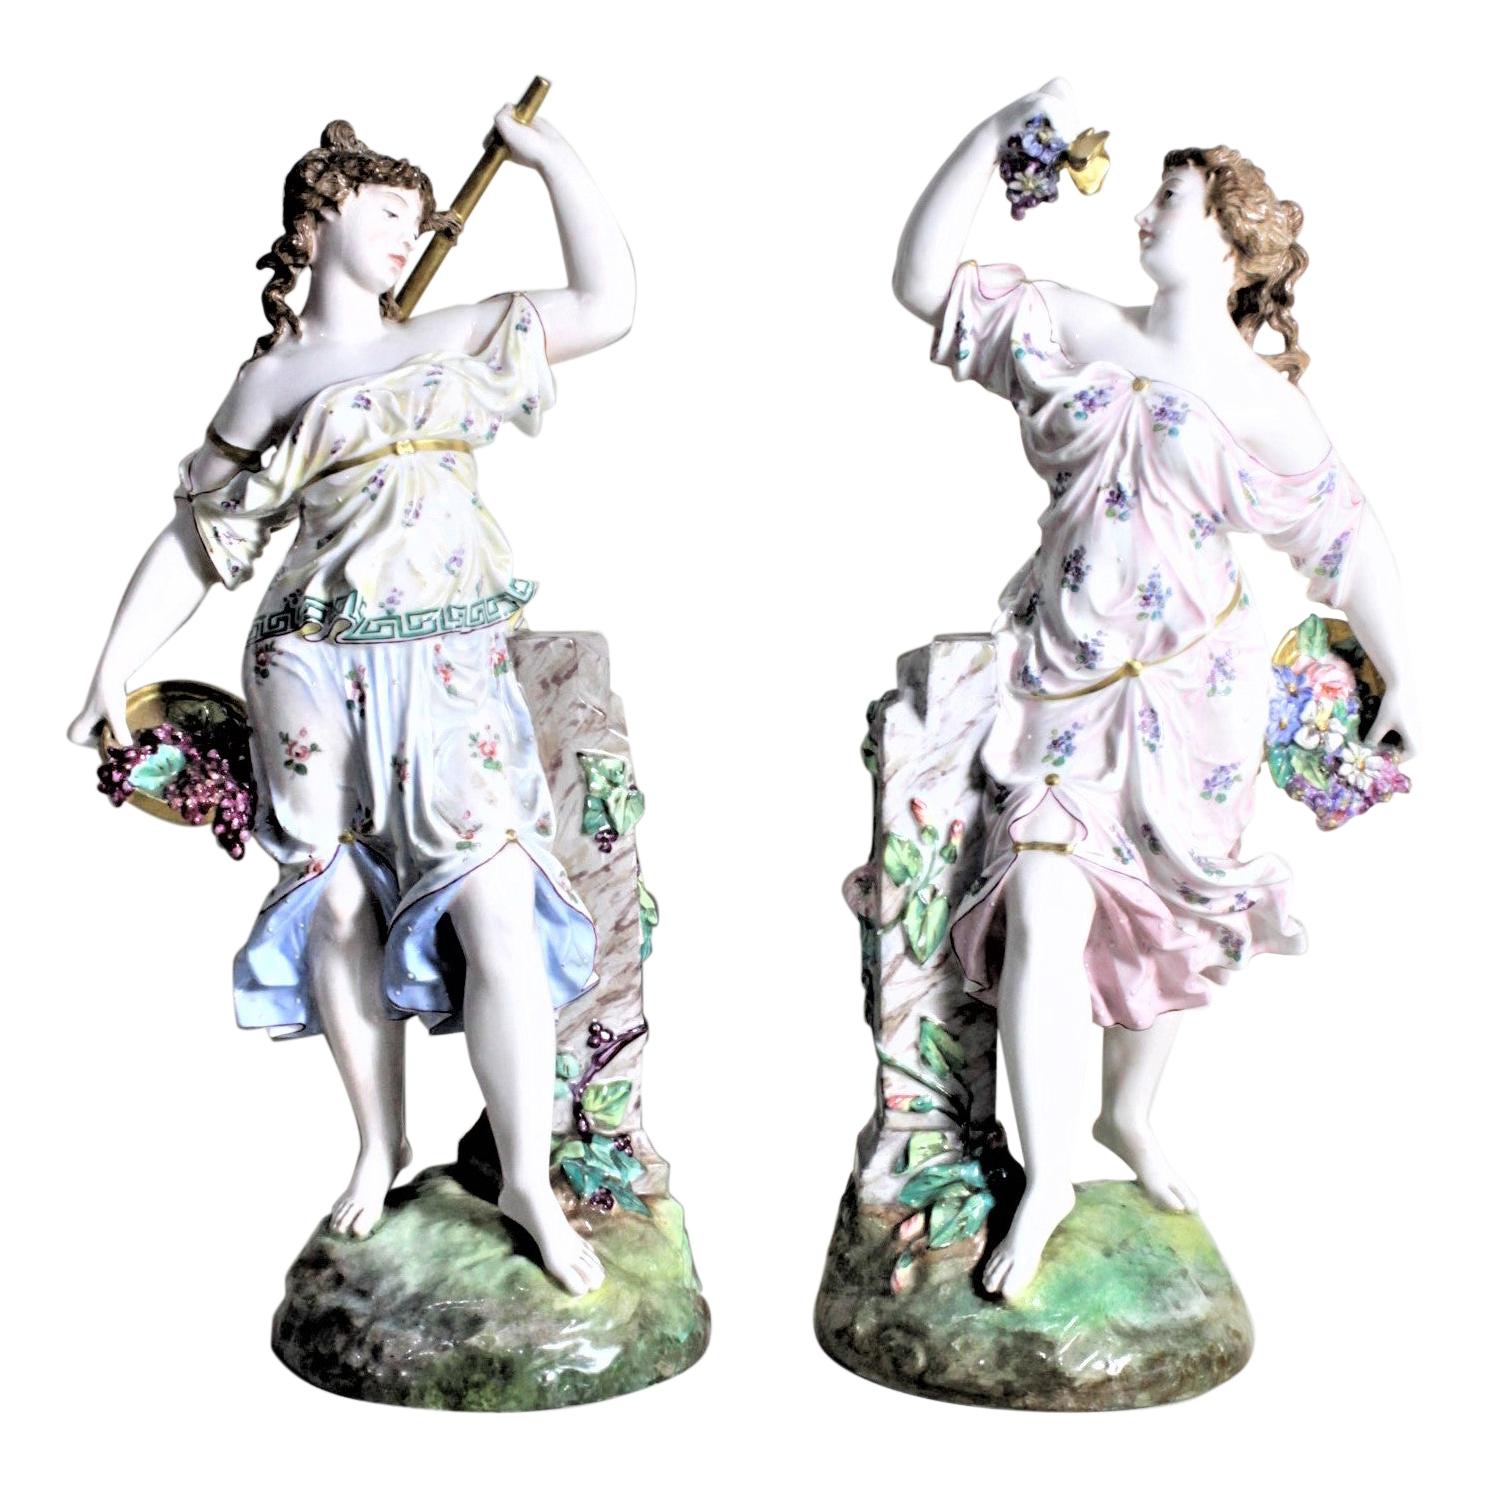 Pair of Antique German or Austrian Porcelain Female Figurines Harvesting Grapes